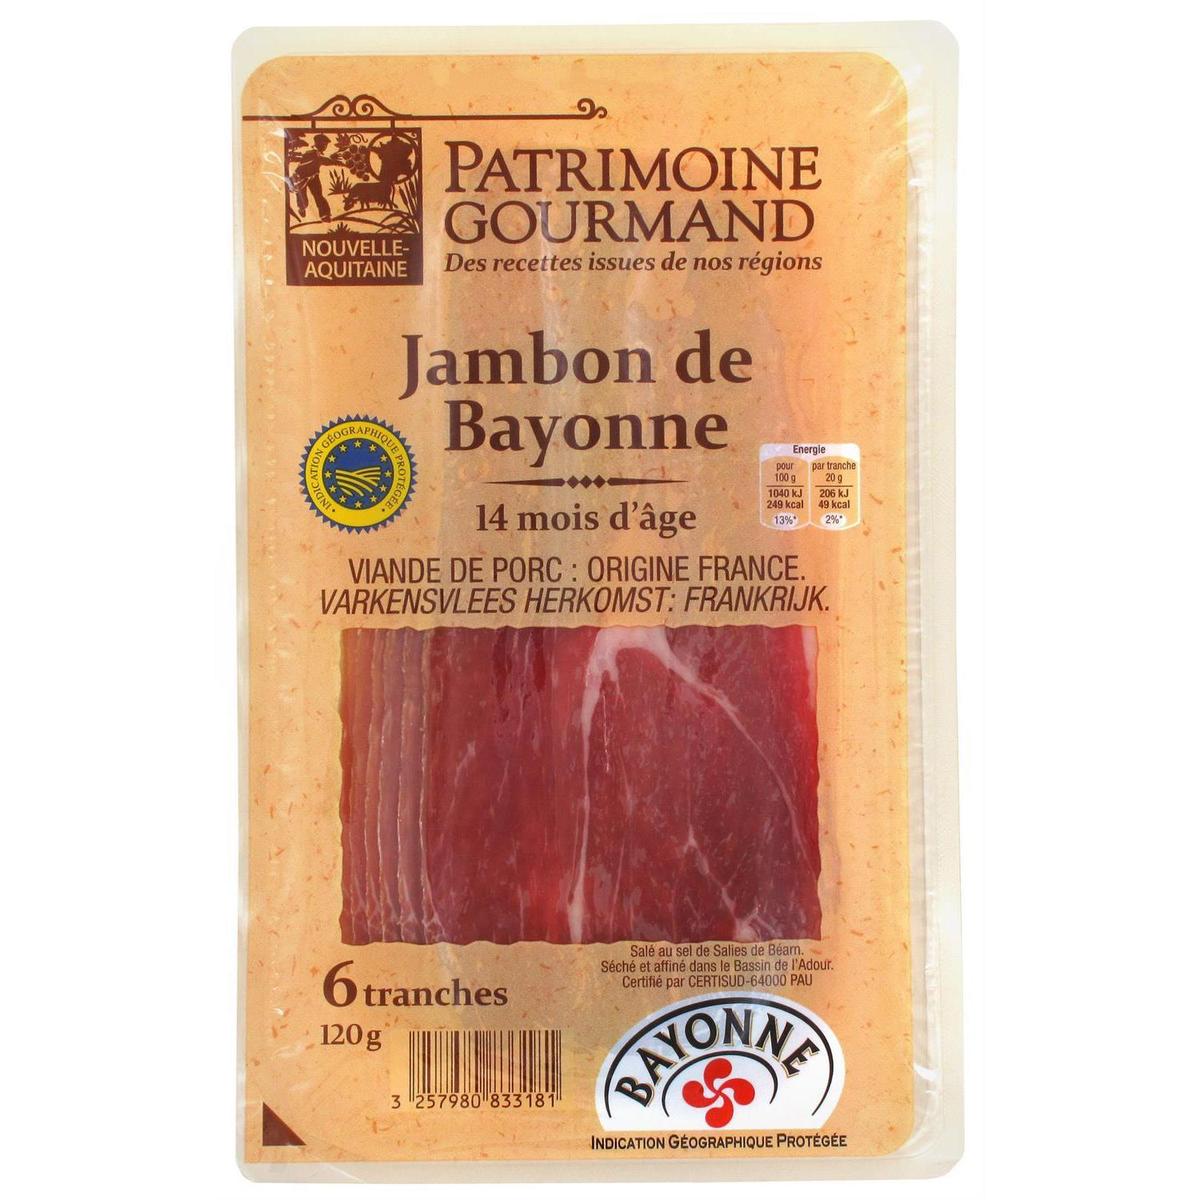 Acheter Patrimoine Gourmand Jambon de Bayonne IGP, 120g, 6 tranches